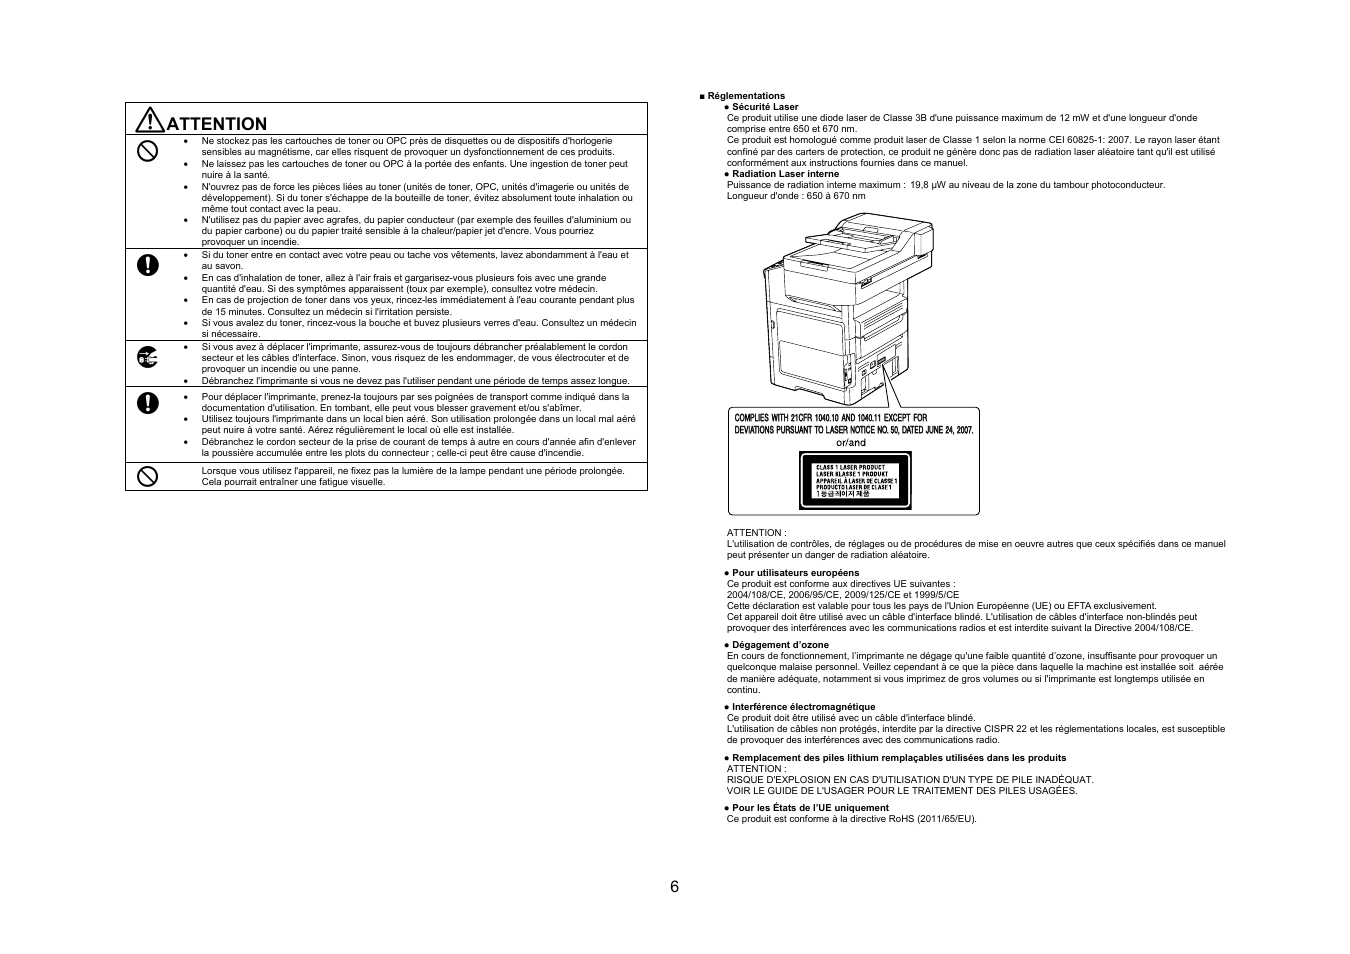 Attention | Konica Minolta bizhub 4050 User Manual | Page 7 / 67